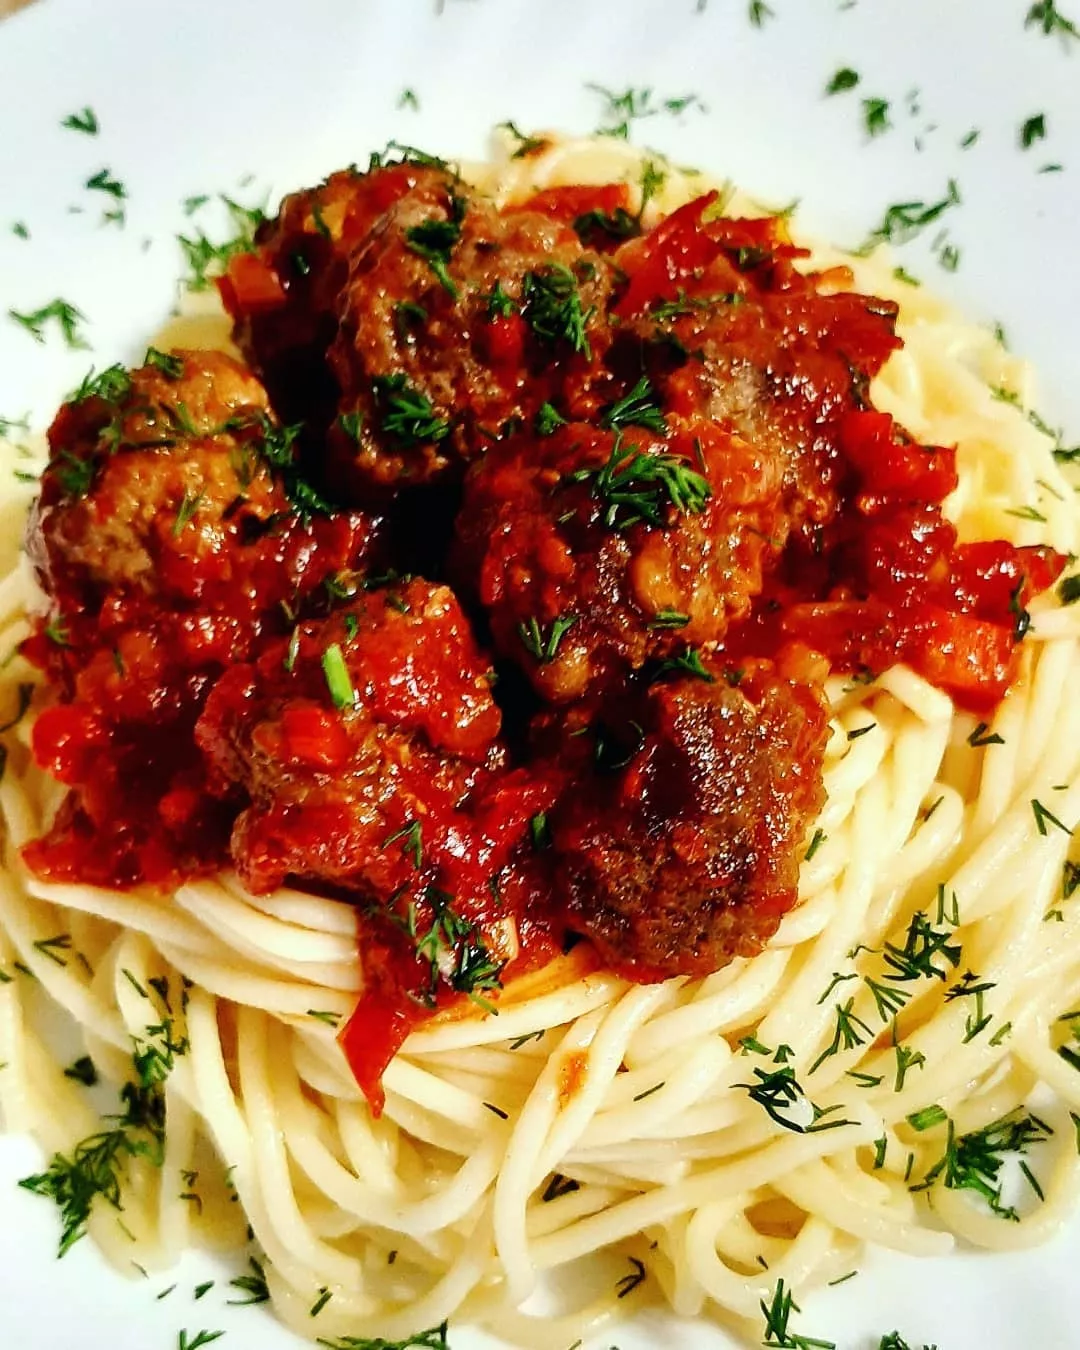 Тефтели со спагетти в томатном соусе 🍝